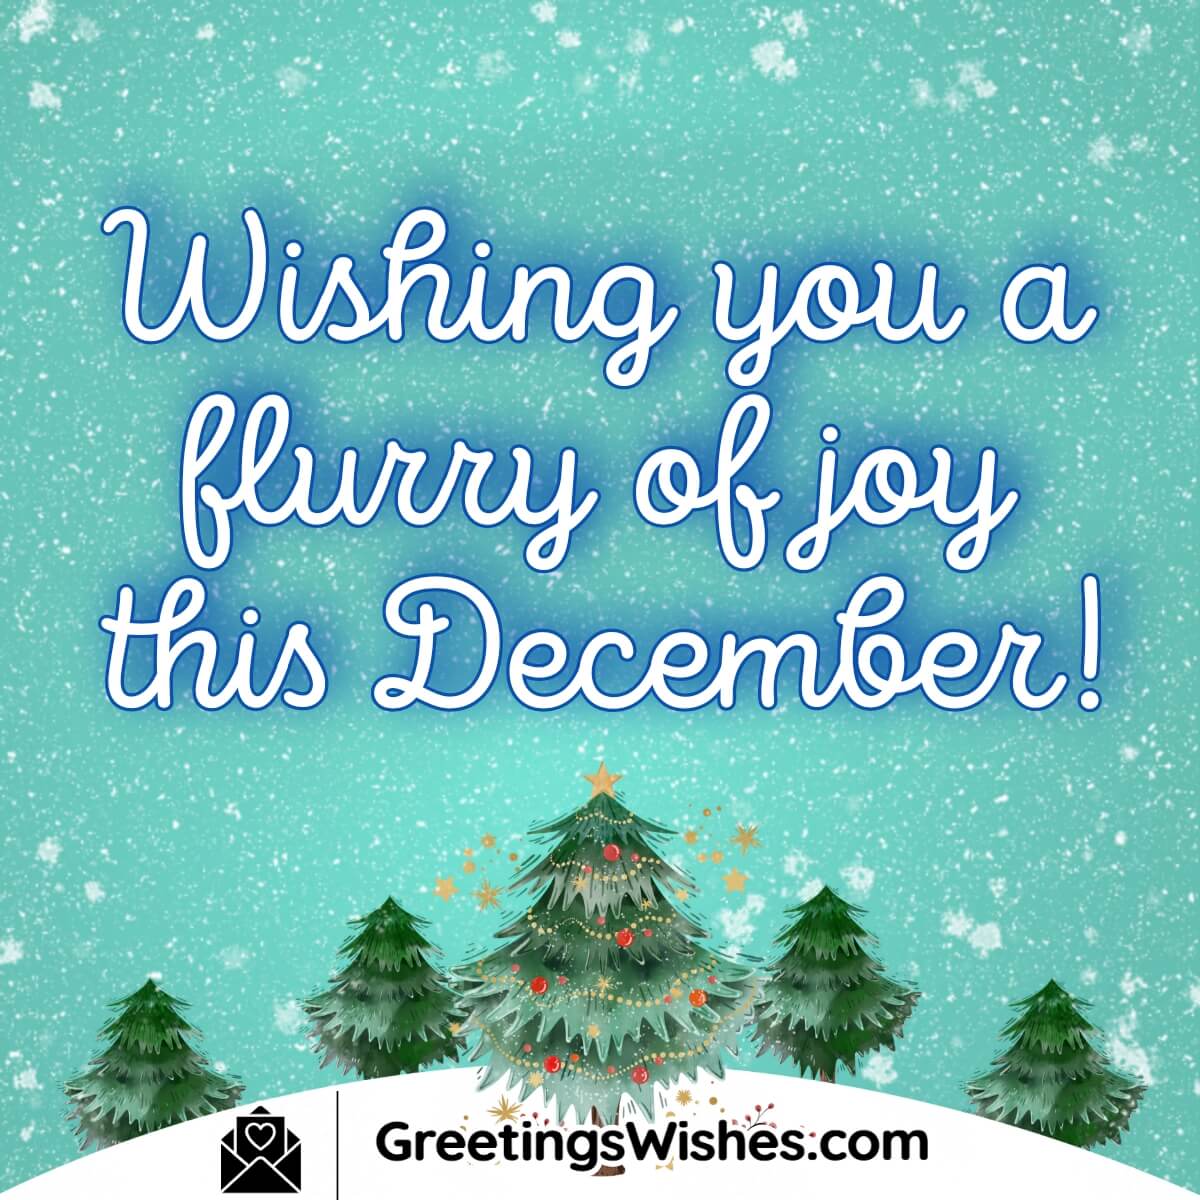 Wishing Flurry Of Joy This December!